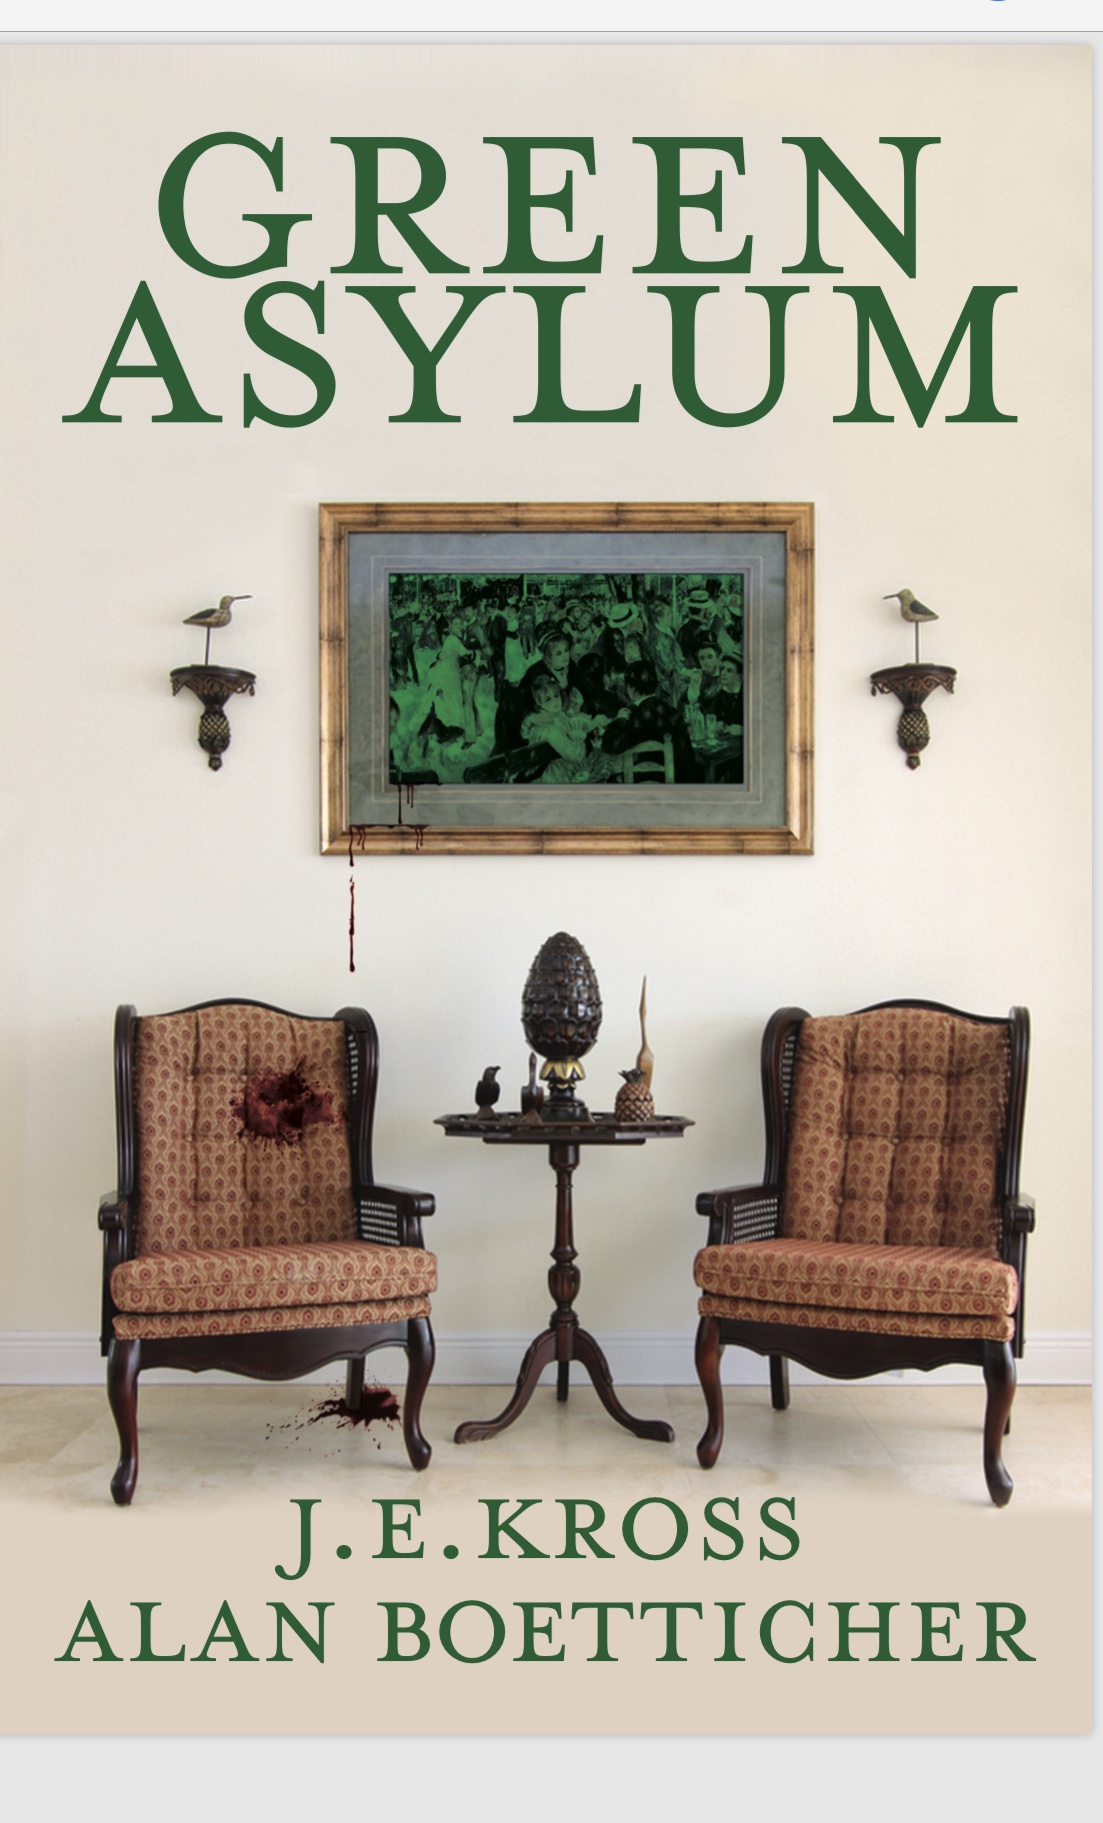 Green Asylum by J.E. Kross and Alan Boetticher